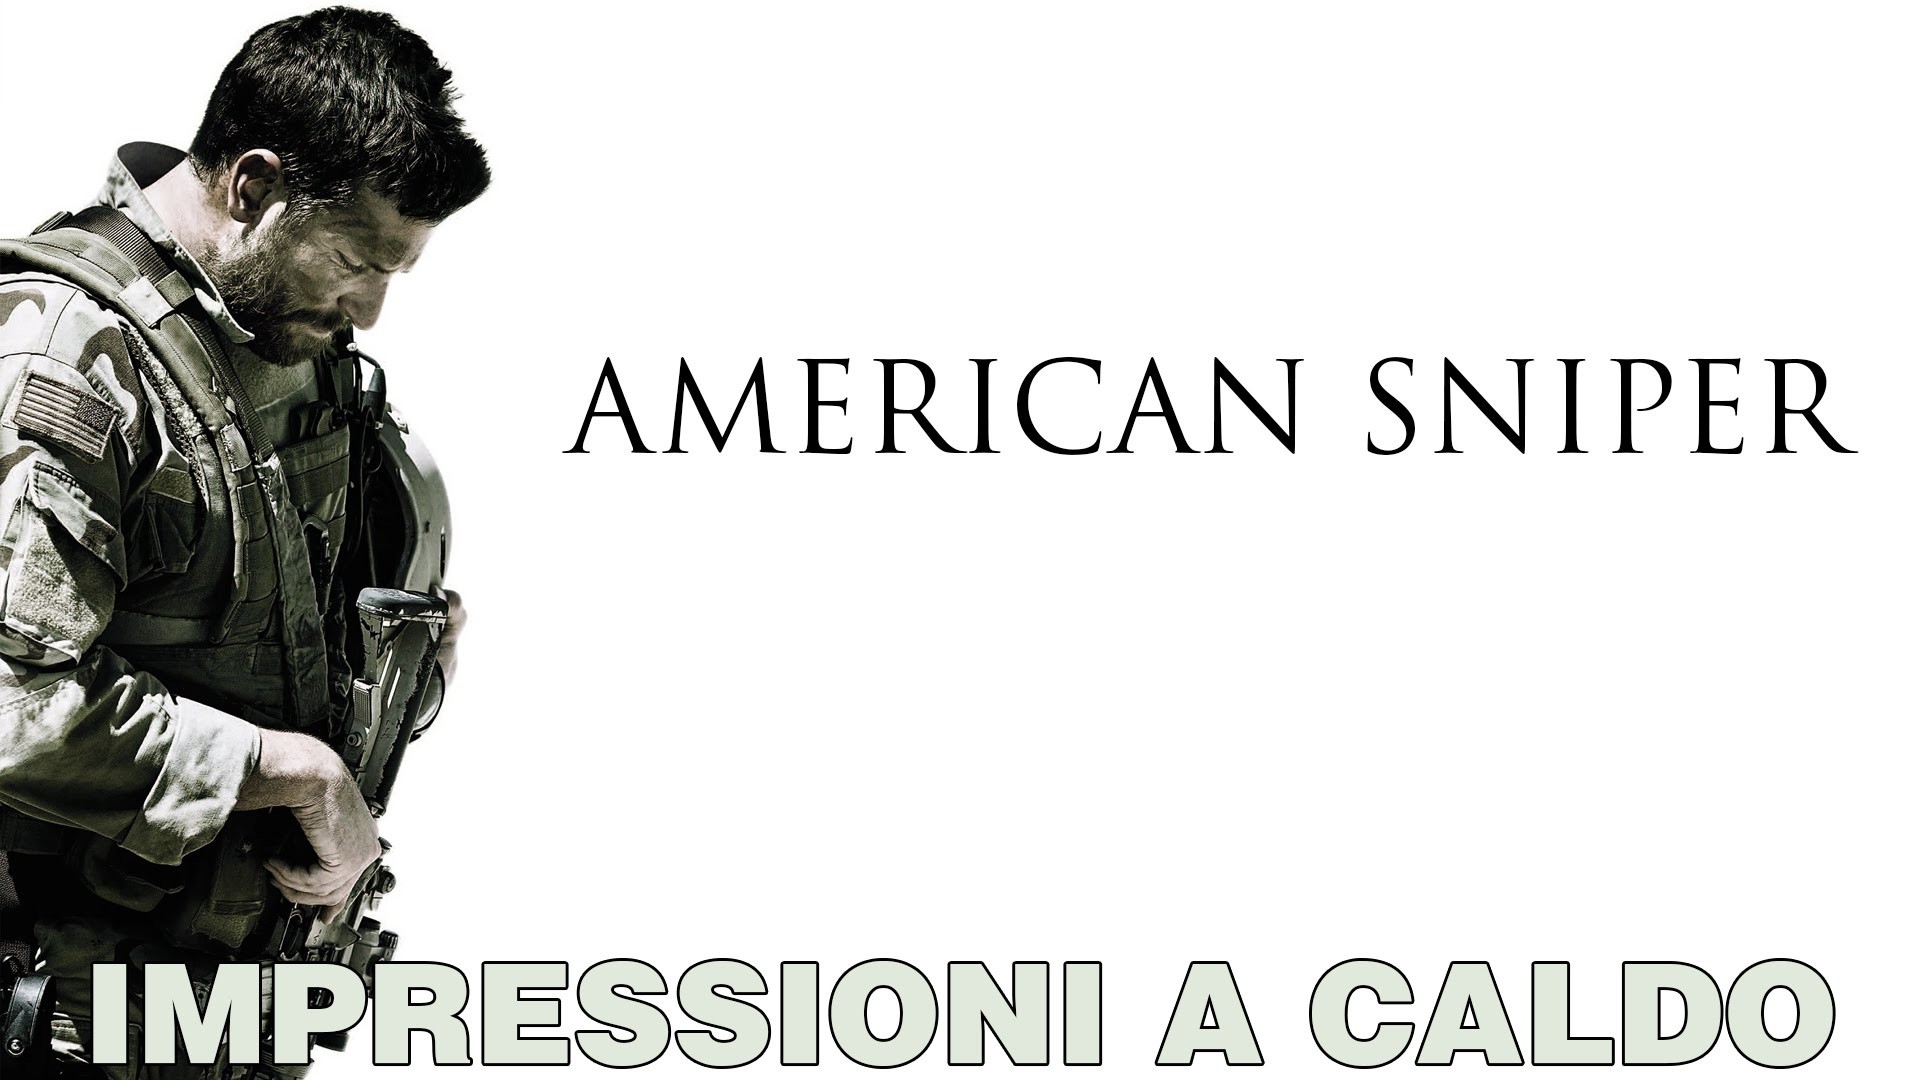 AMERICAN SNIPER #IMPRESSIONIACALDO